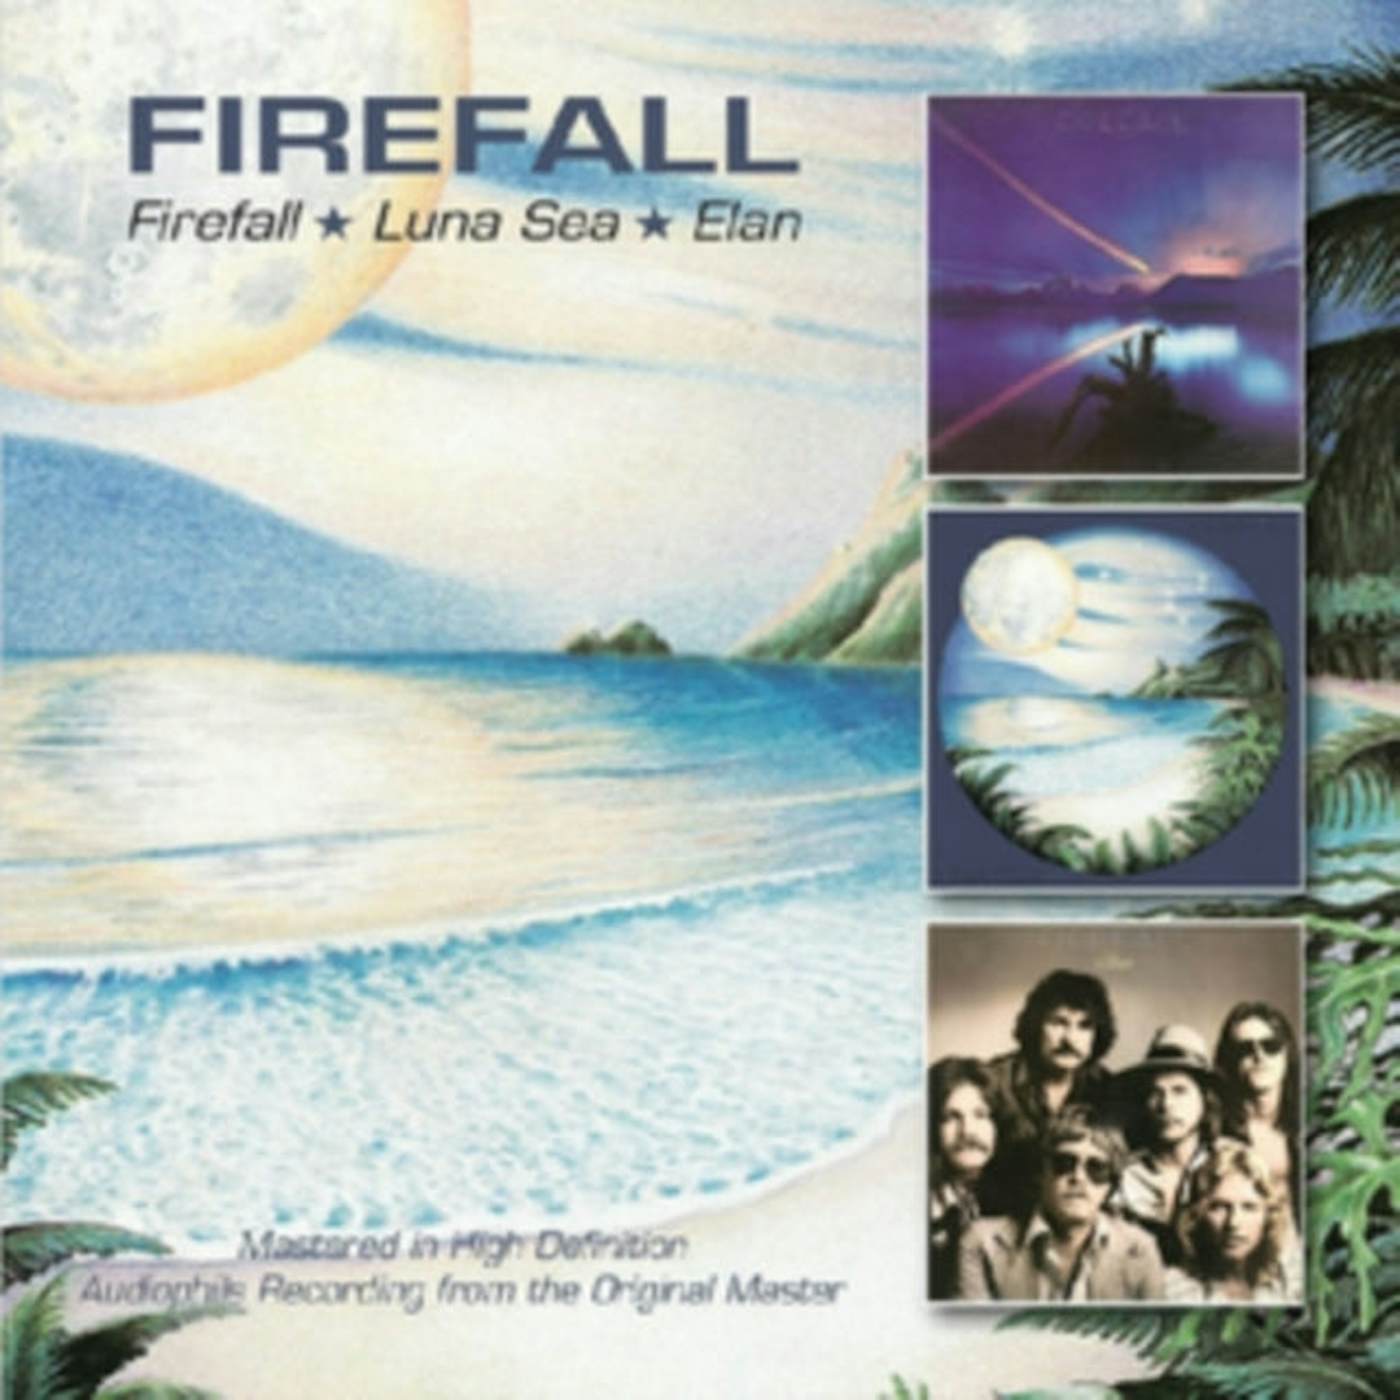 Firefall CD - Firefall/Luna Sea/Elan